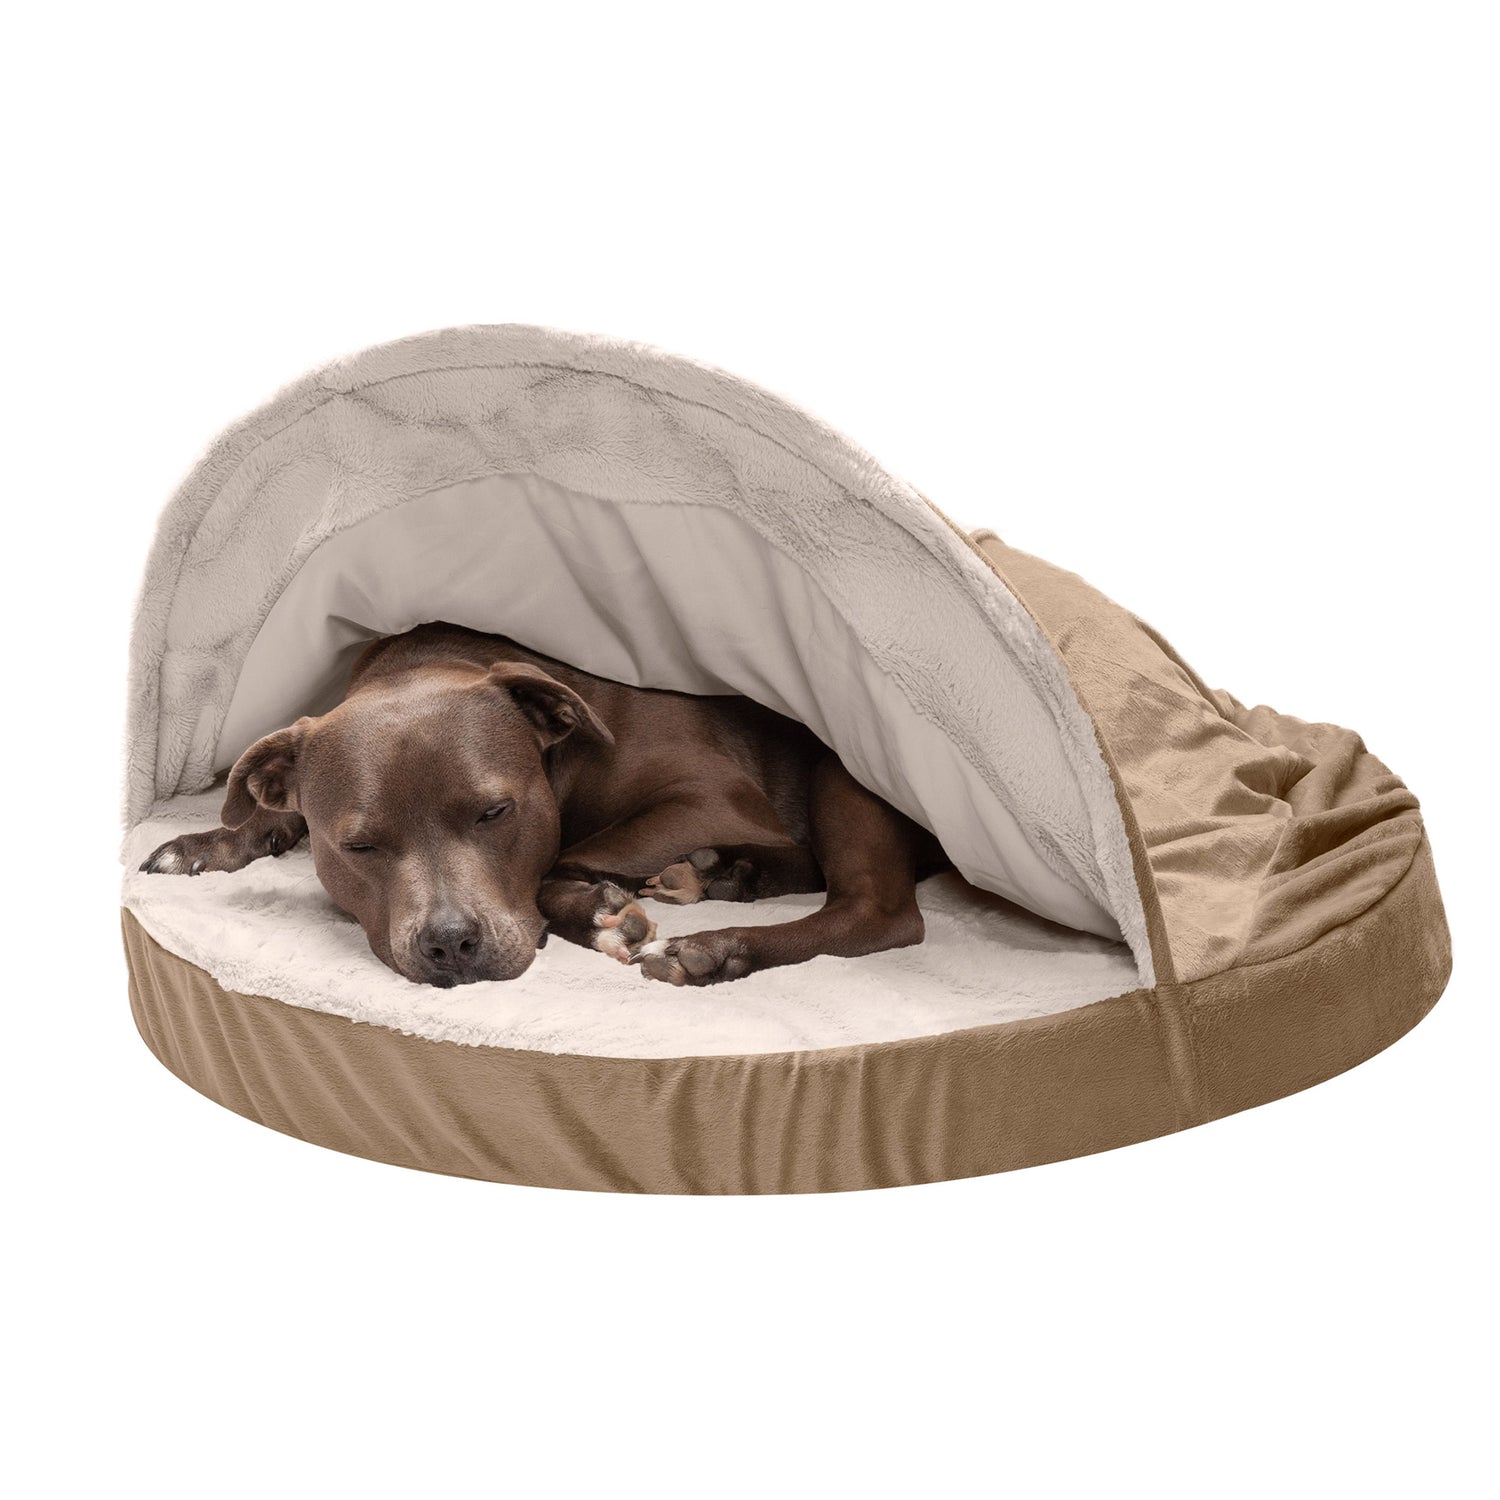 Furhaven Pet Dog Bed | Orthopedic Wave Fur & Velvet Snuggery Burrow Pet Bed for Dogs & Cats, Brownstone, 35" Base